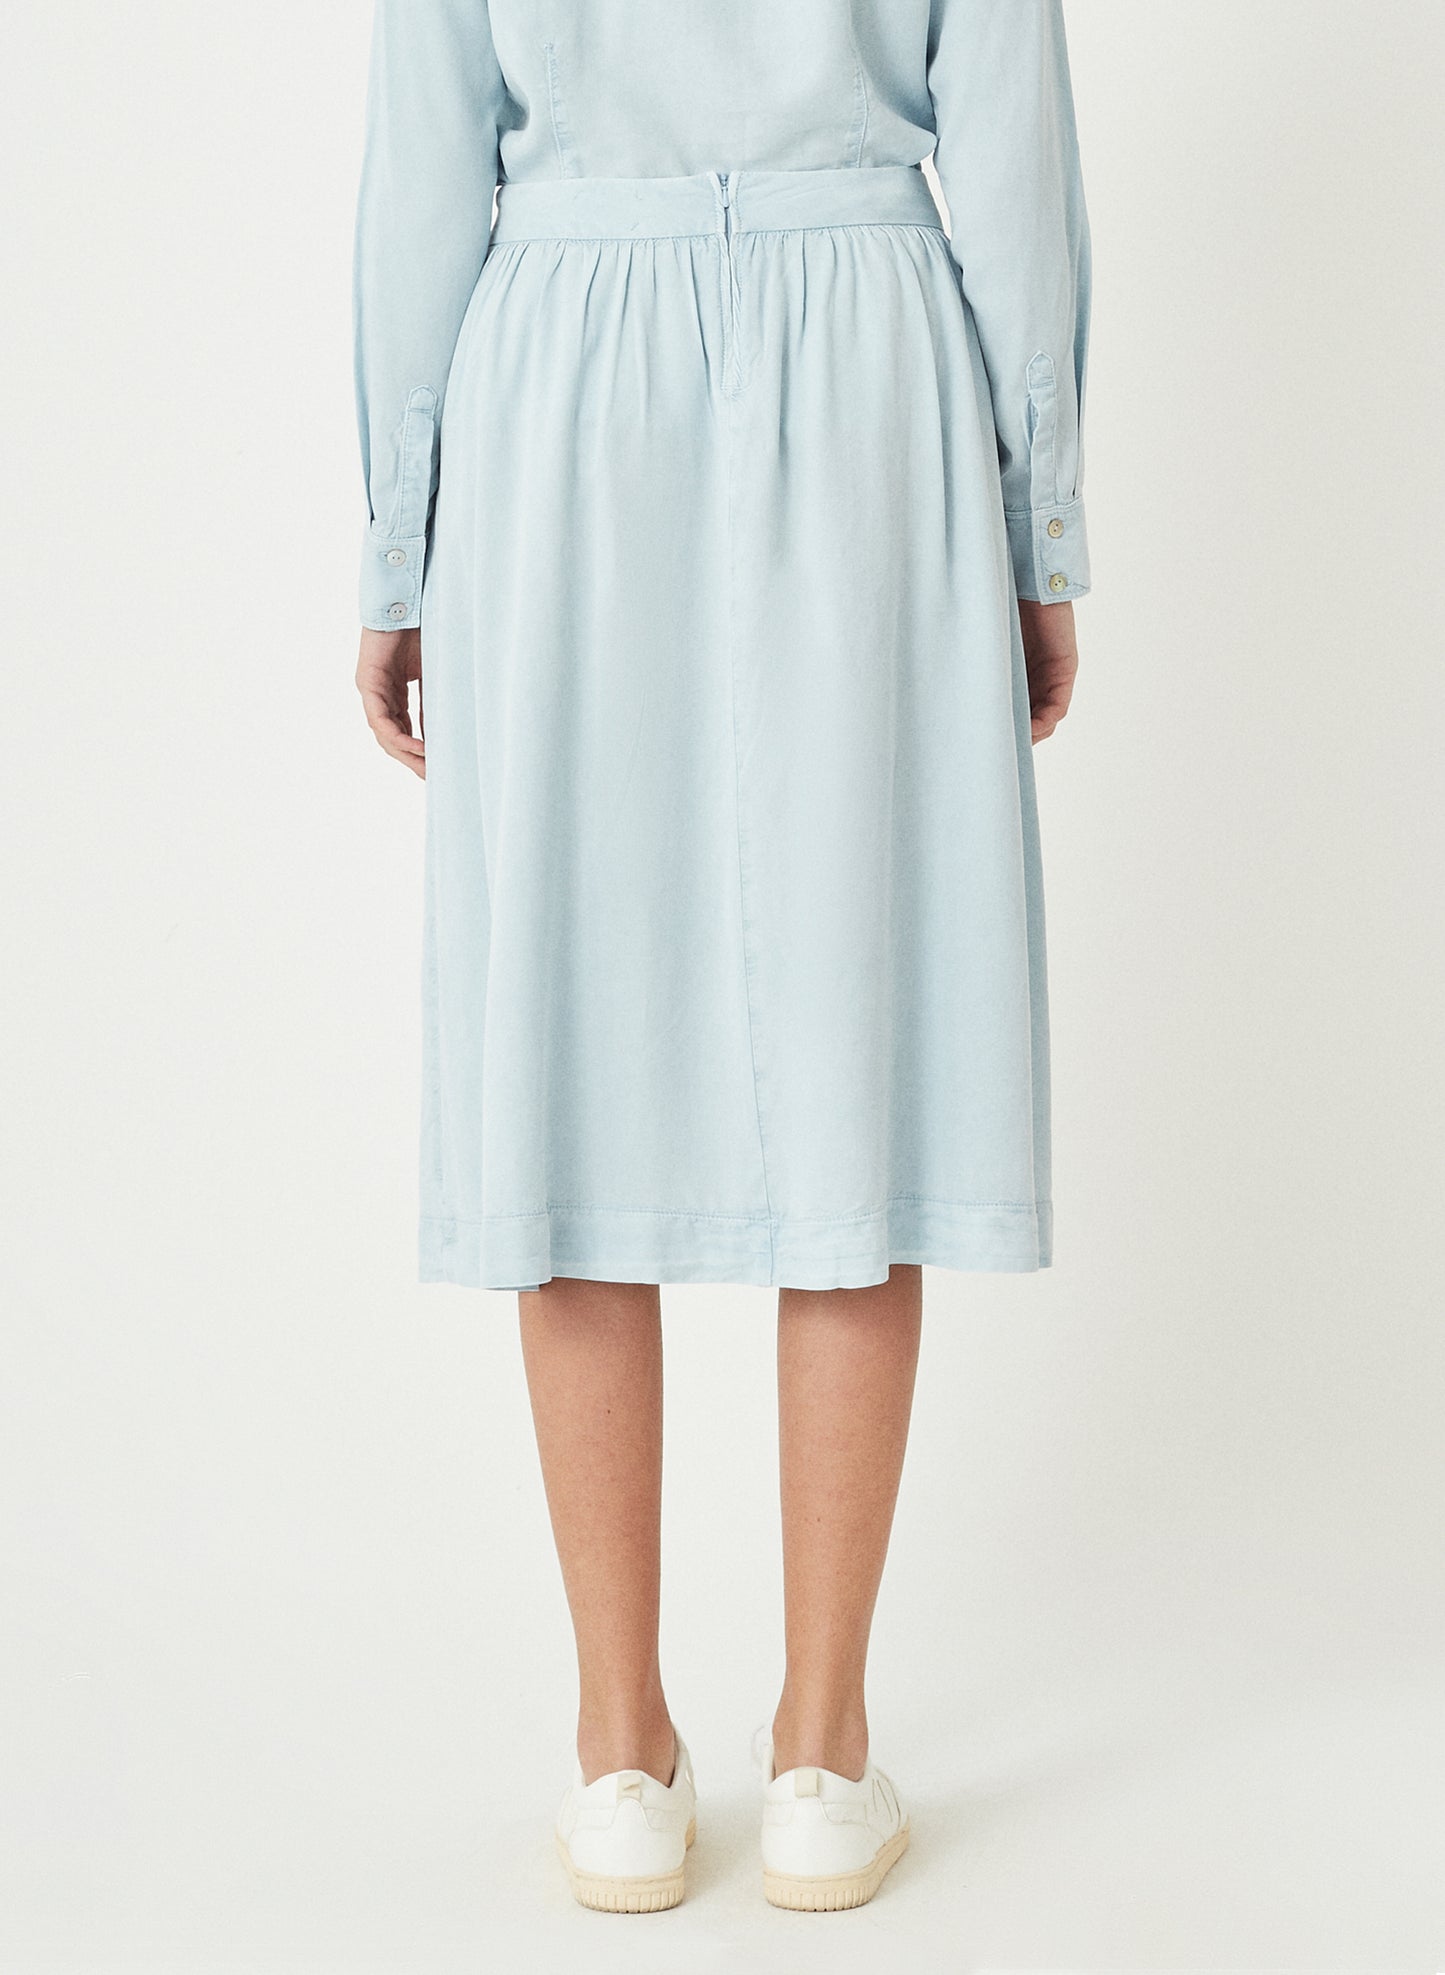 RINA - Long Pleated Tencel™ Skirt - Blue Dream